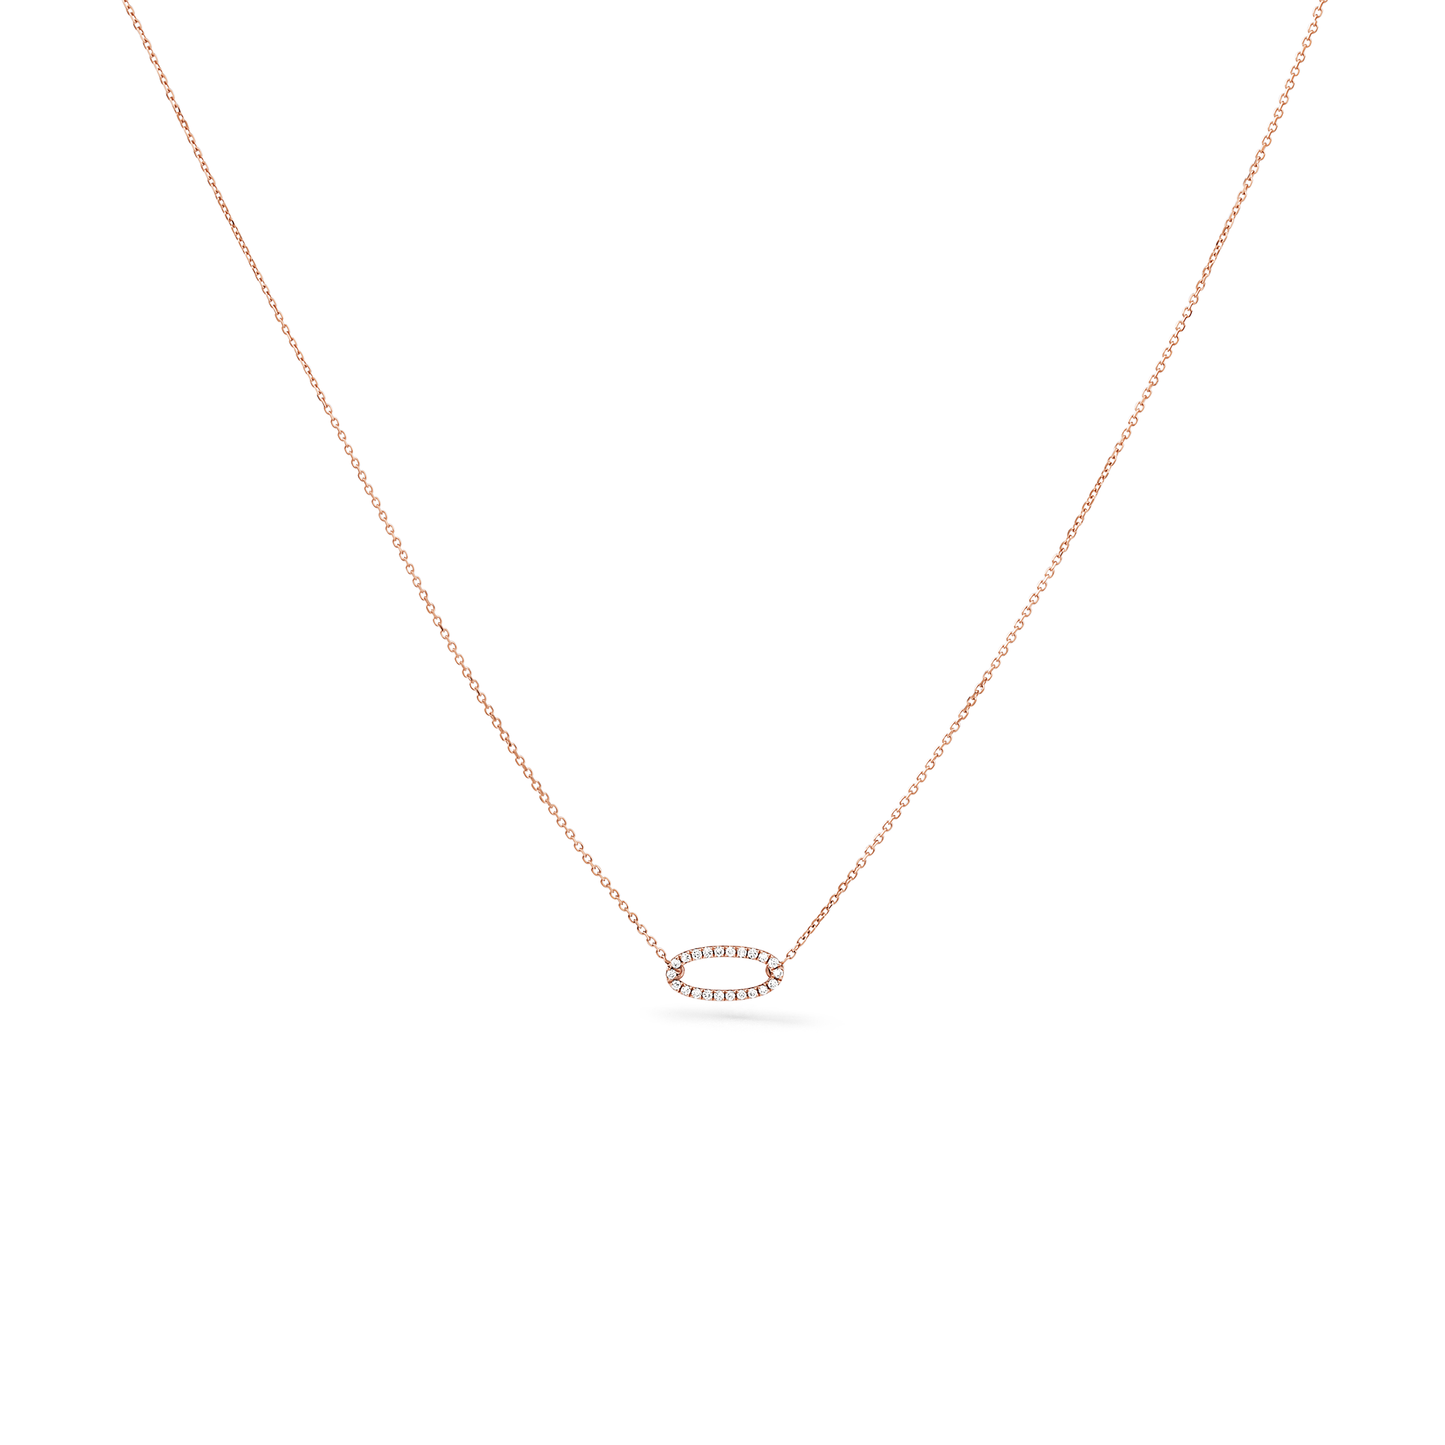 Oliver Heemeyer Oval Diamond Necklace in 18k rose gold.